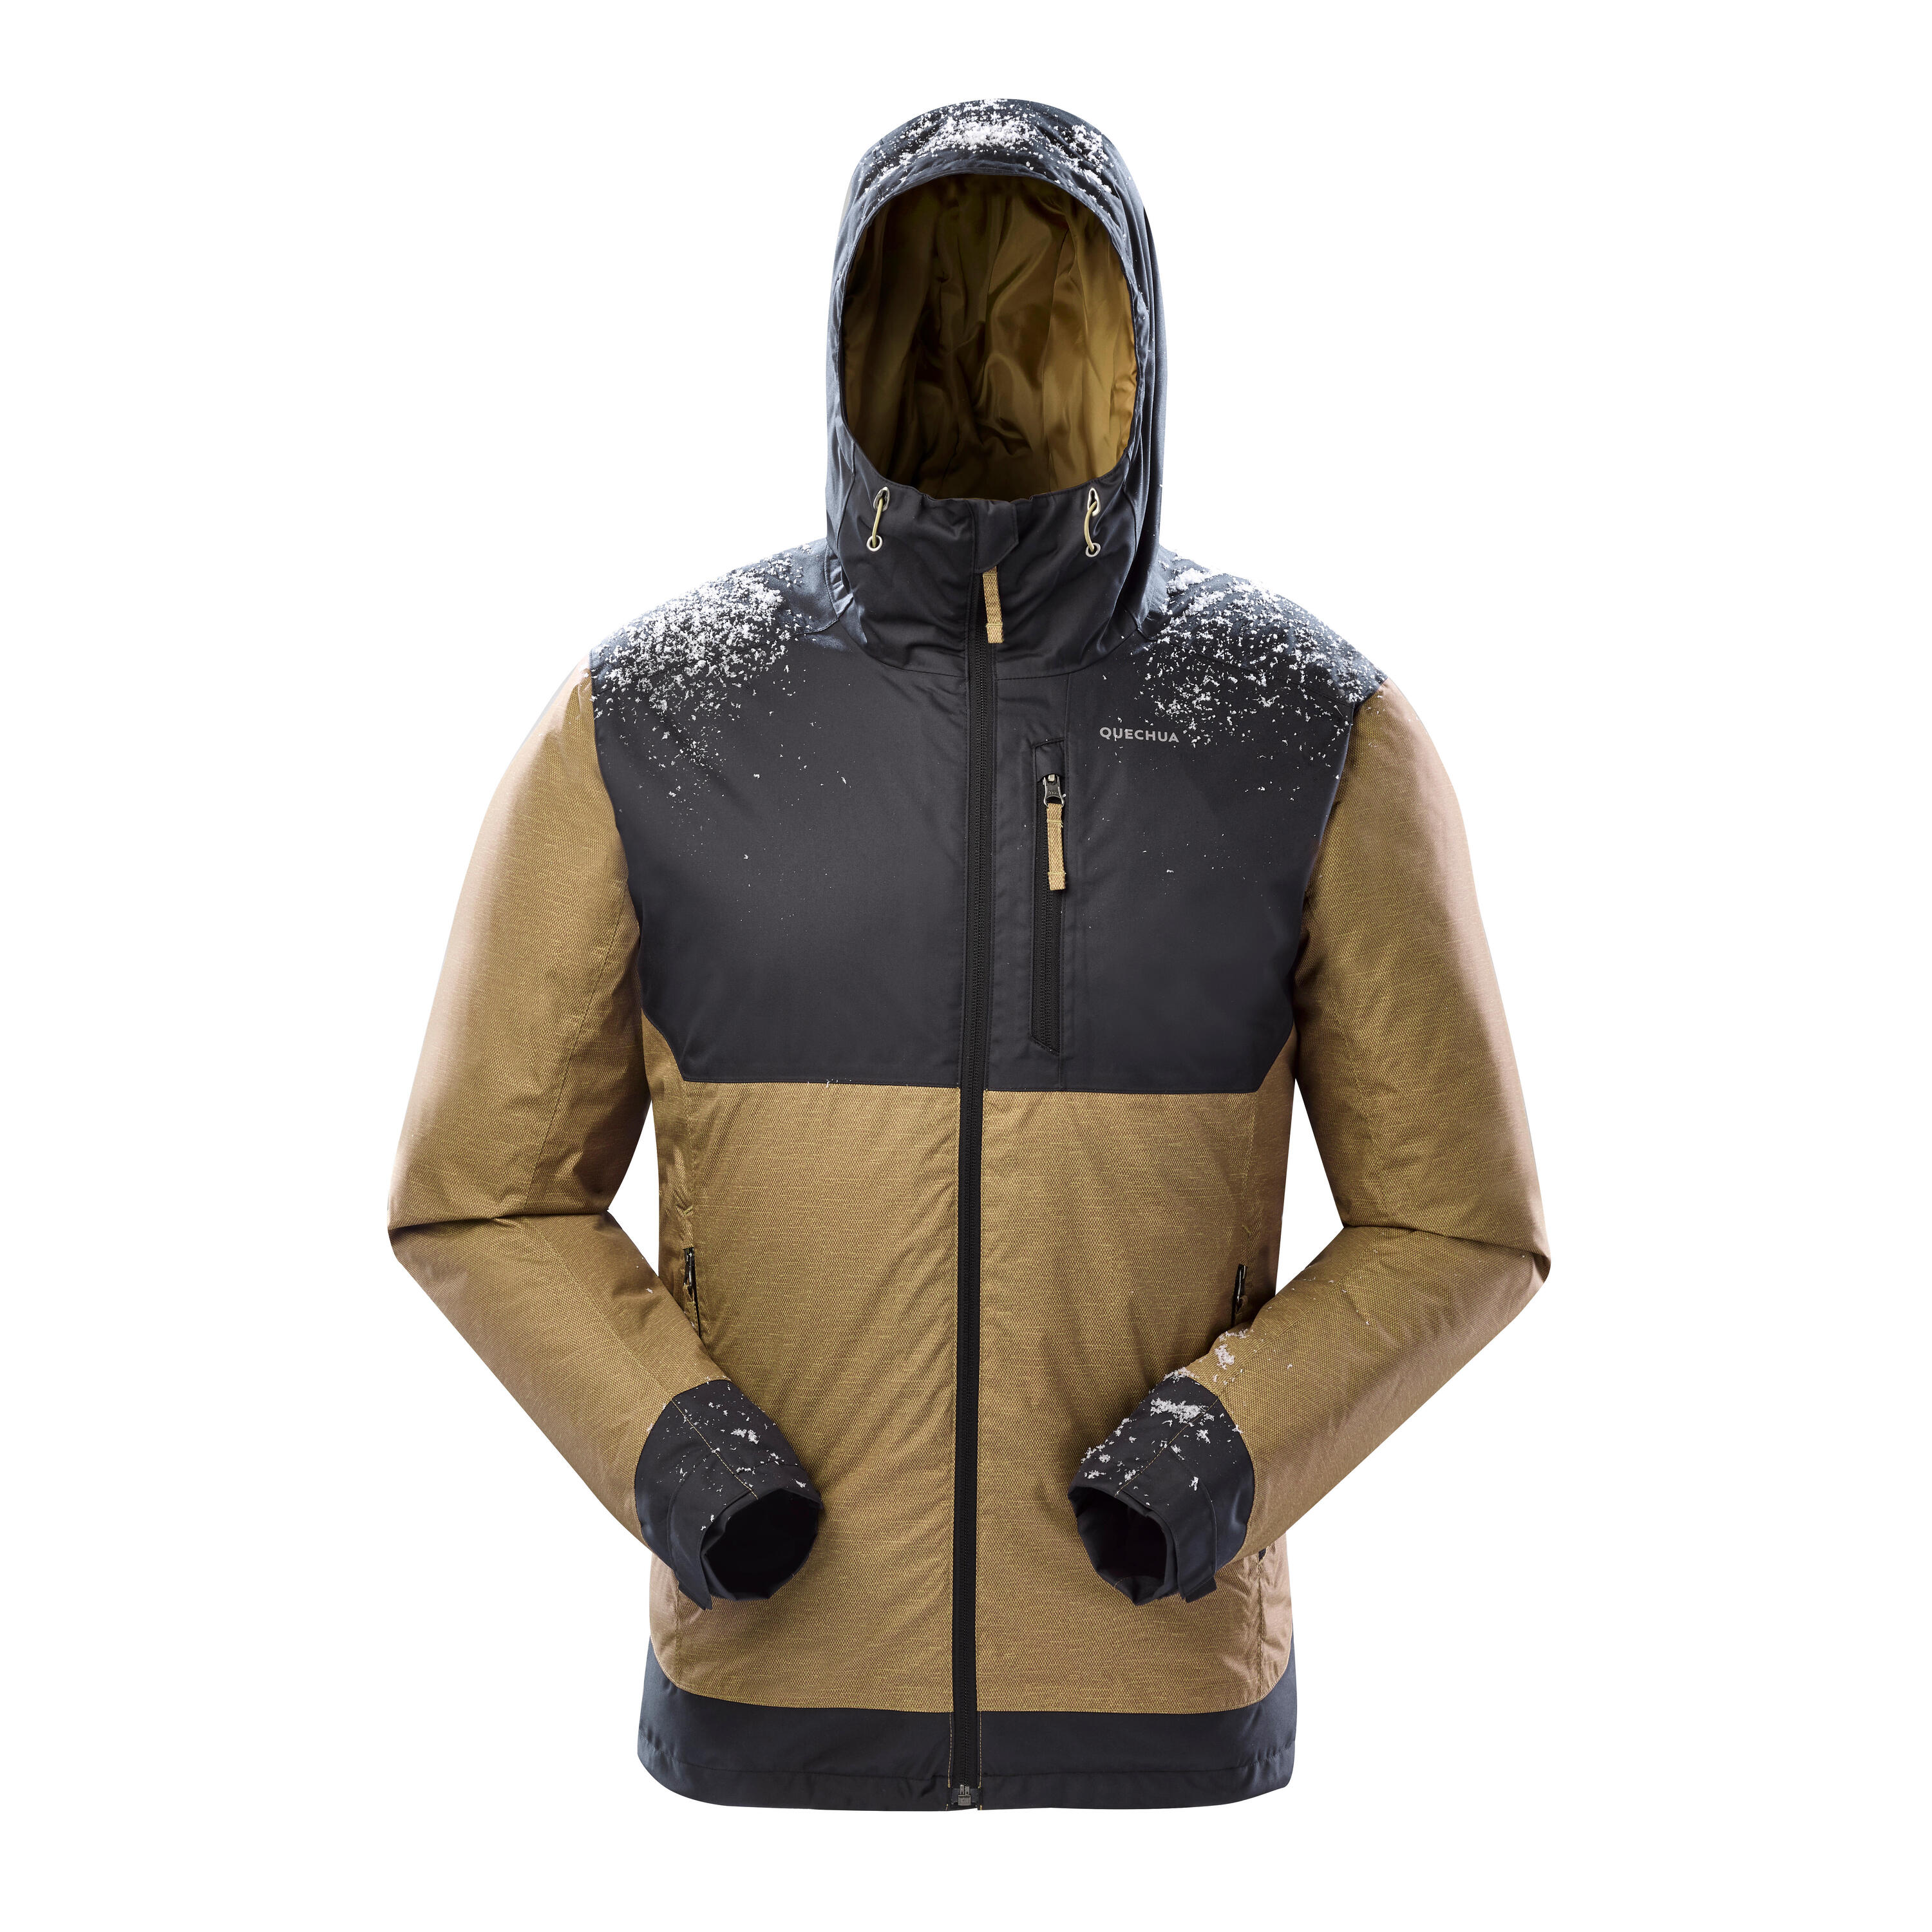 Men’s hiking waterproof winter jacket - SH500 -10°C 22/22